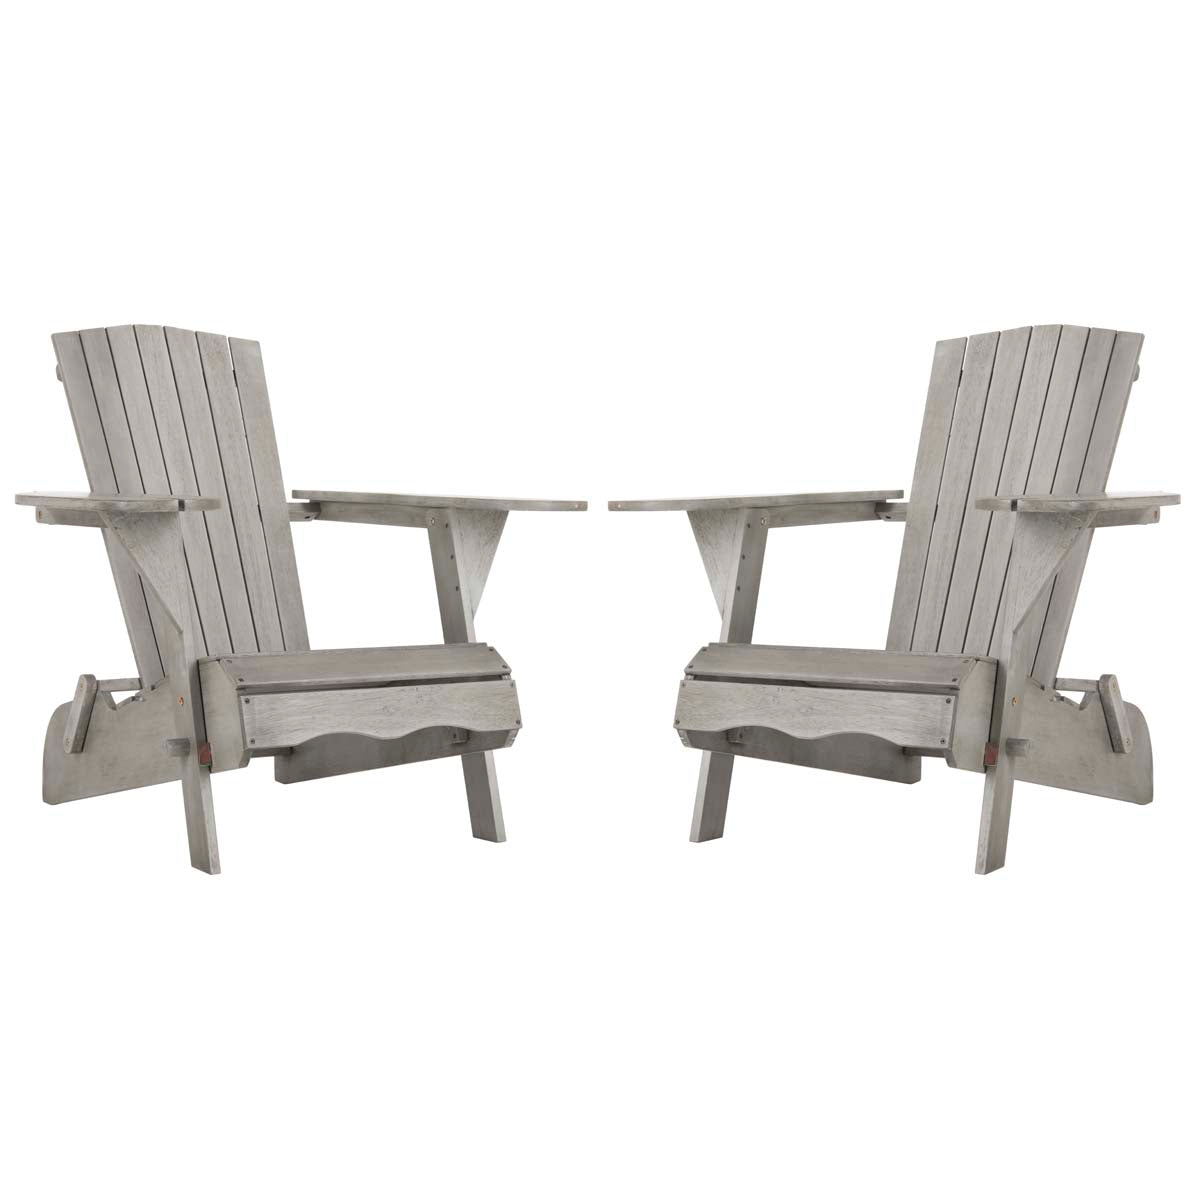 Safavieh Breetel Set Of 2 Adirondack Chairs , PAT7034